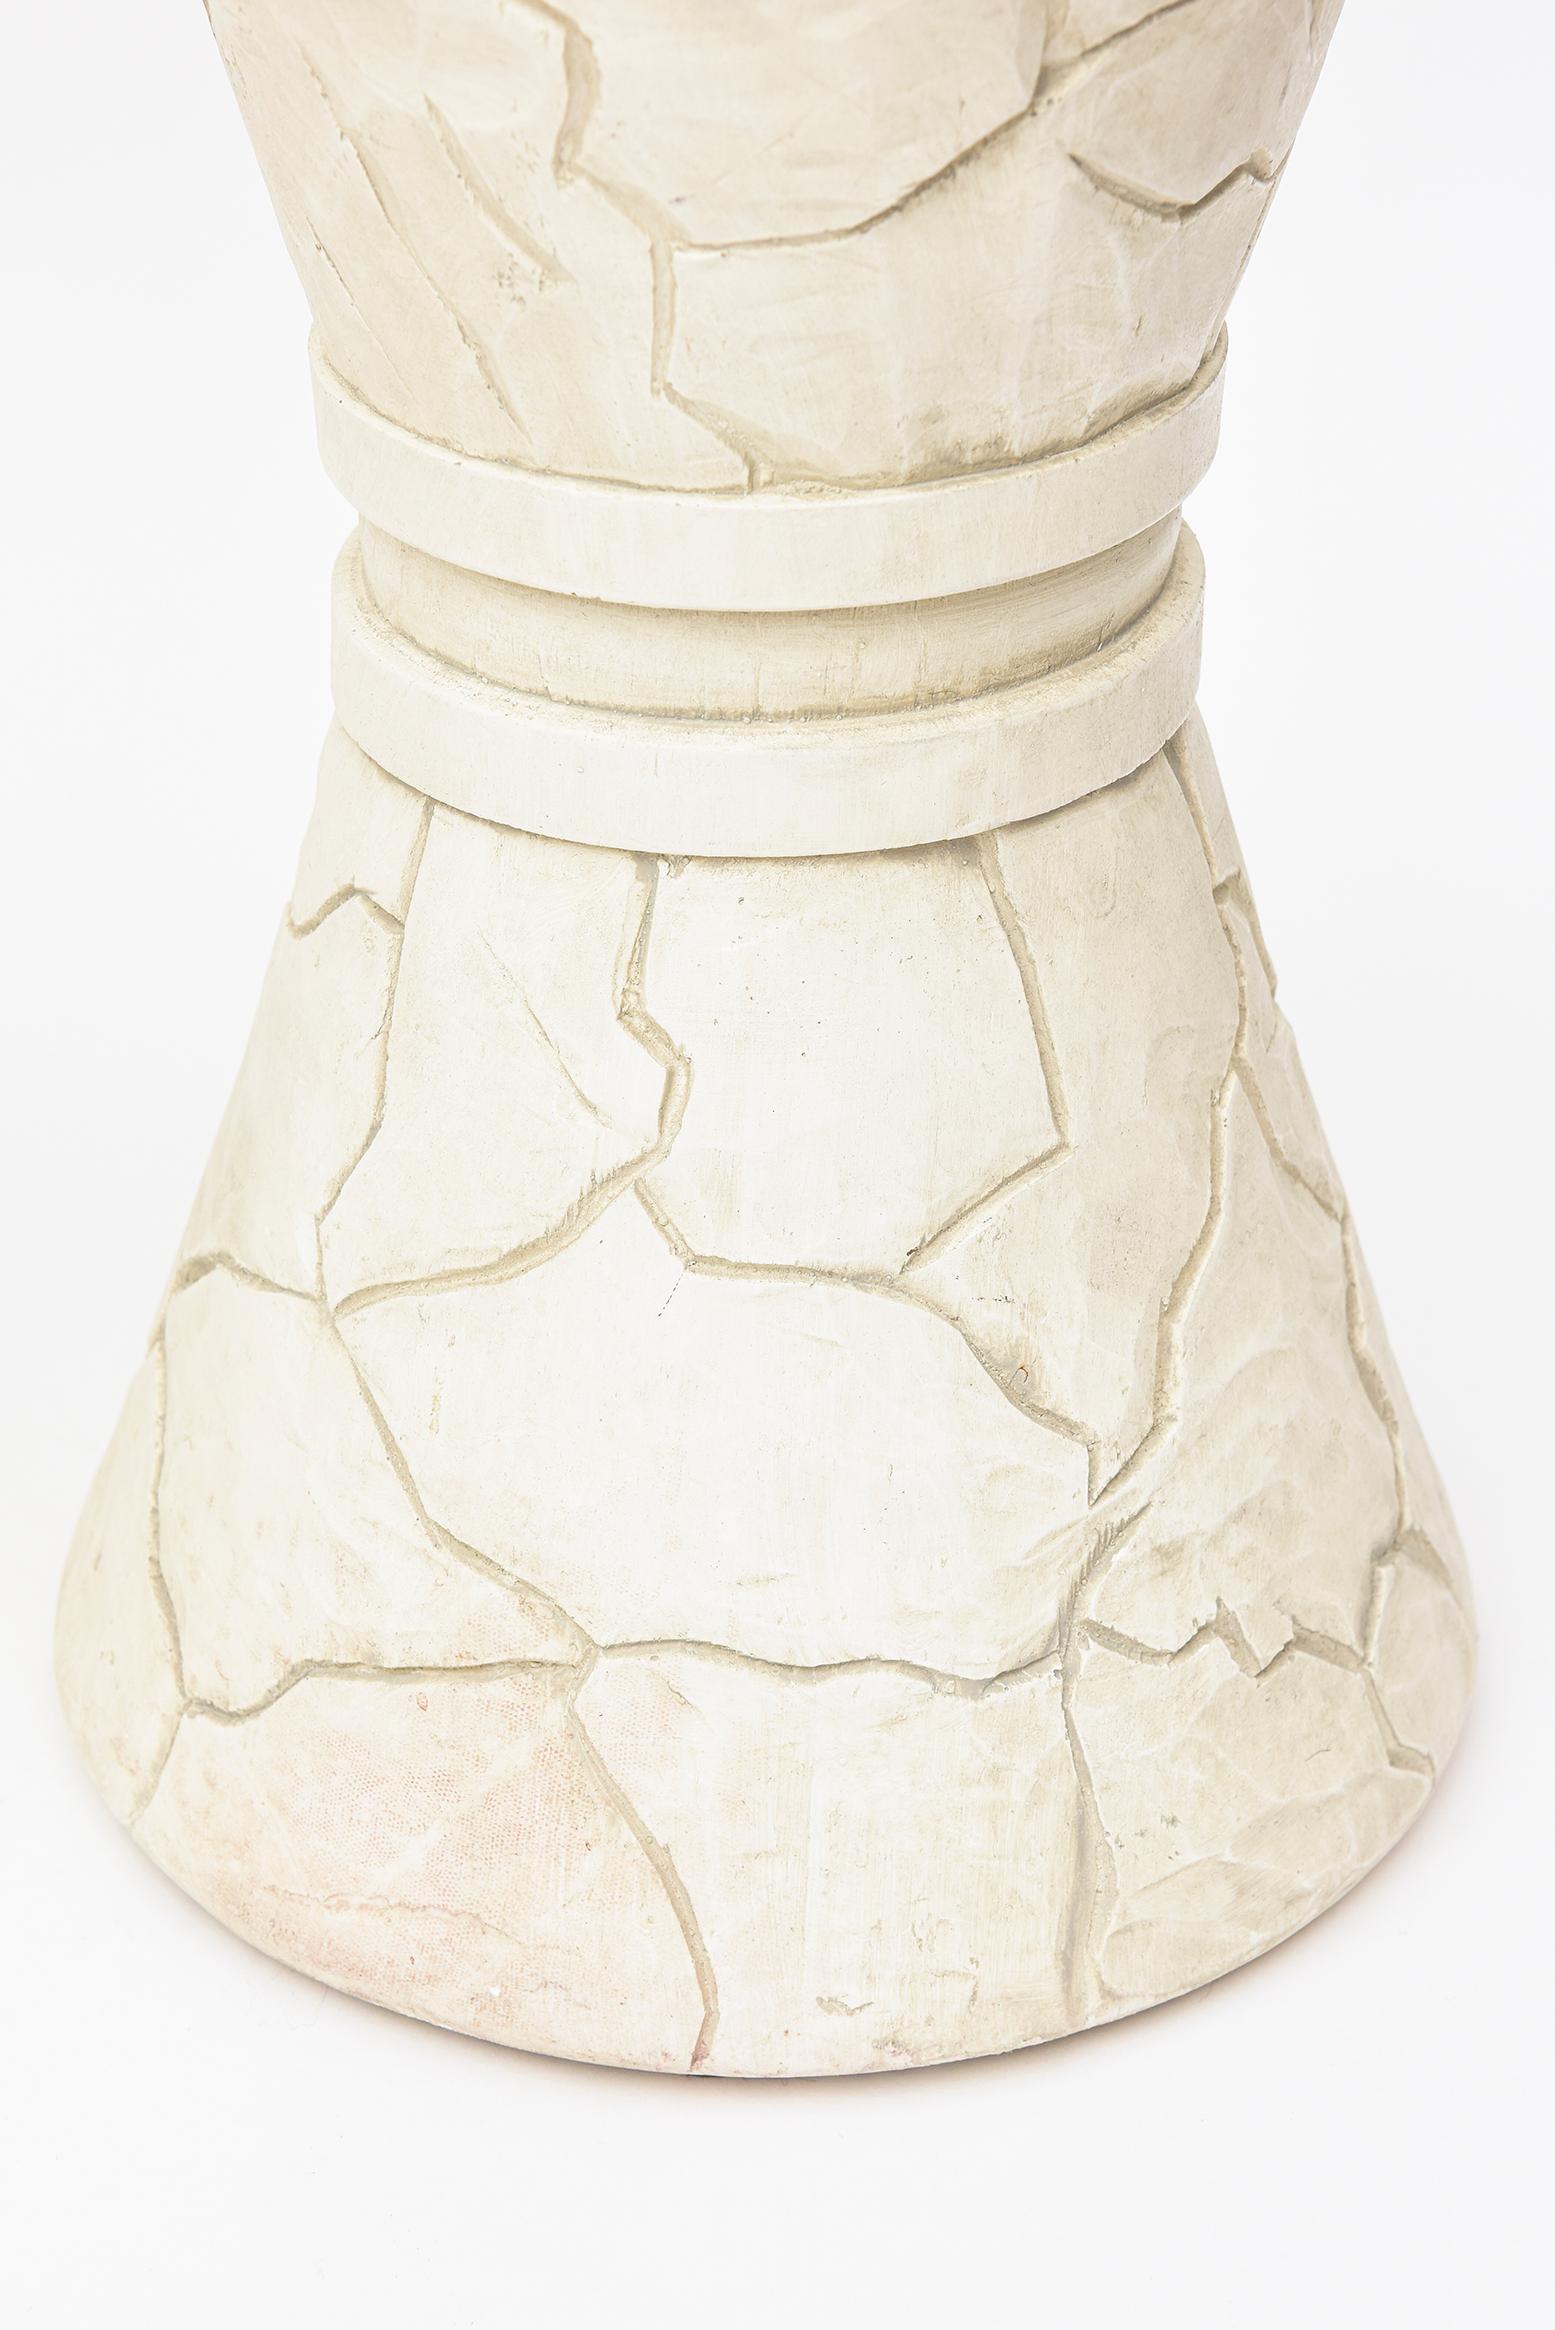 Vintage Organic Modern Ceramic Pebbled Off-White Signed Japanese Lamps Pair Of (Ende des 20. Jahrhunderts) im Angebot